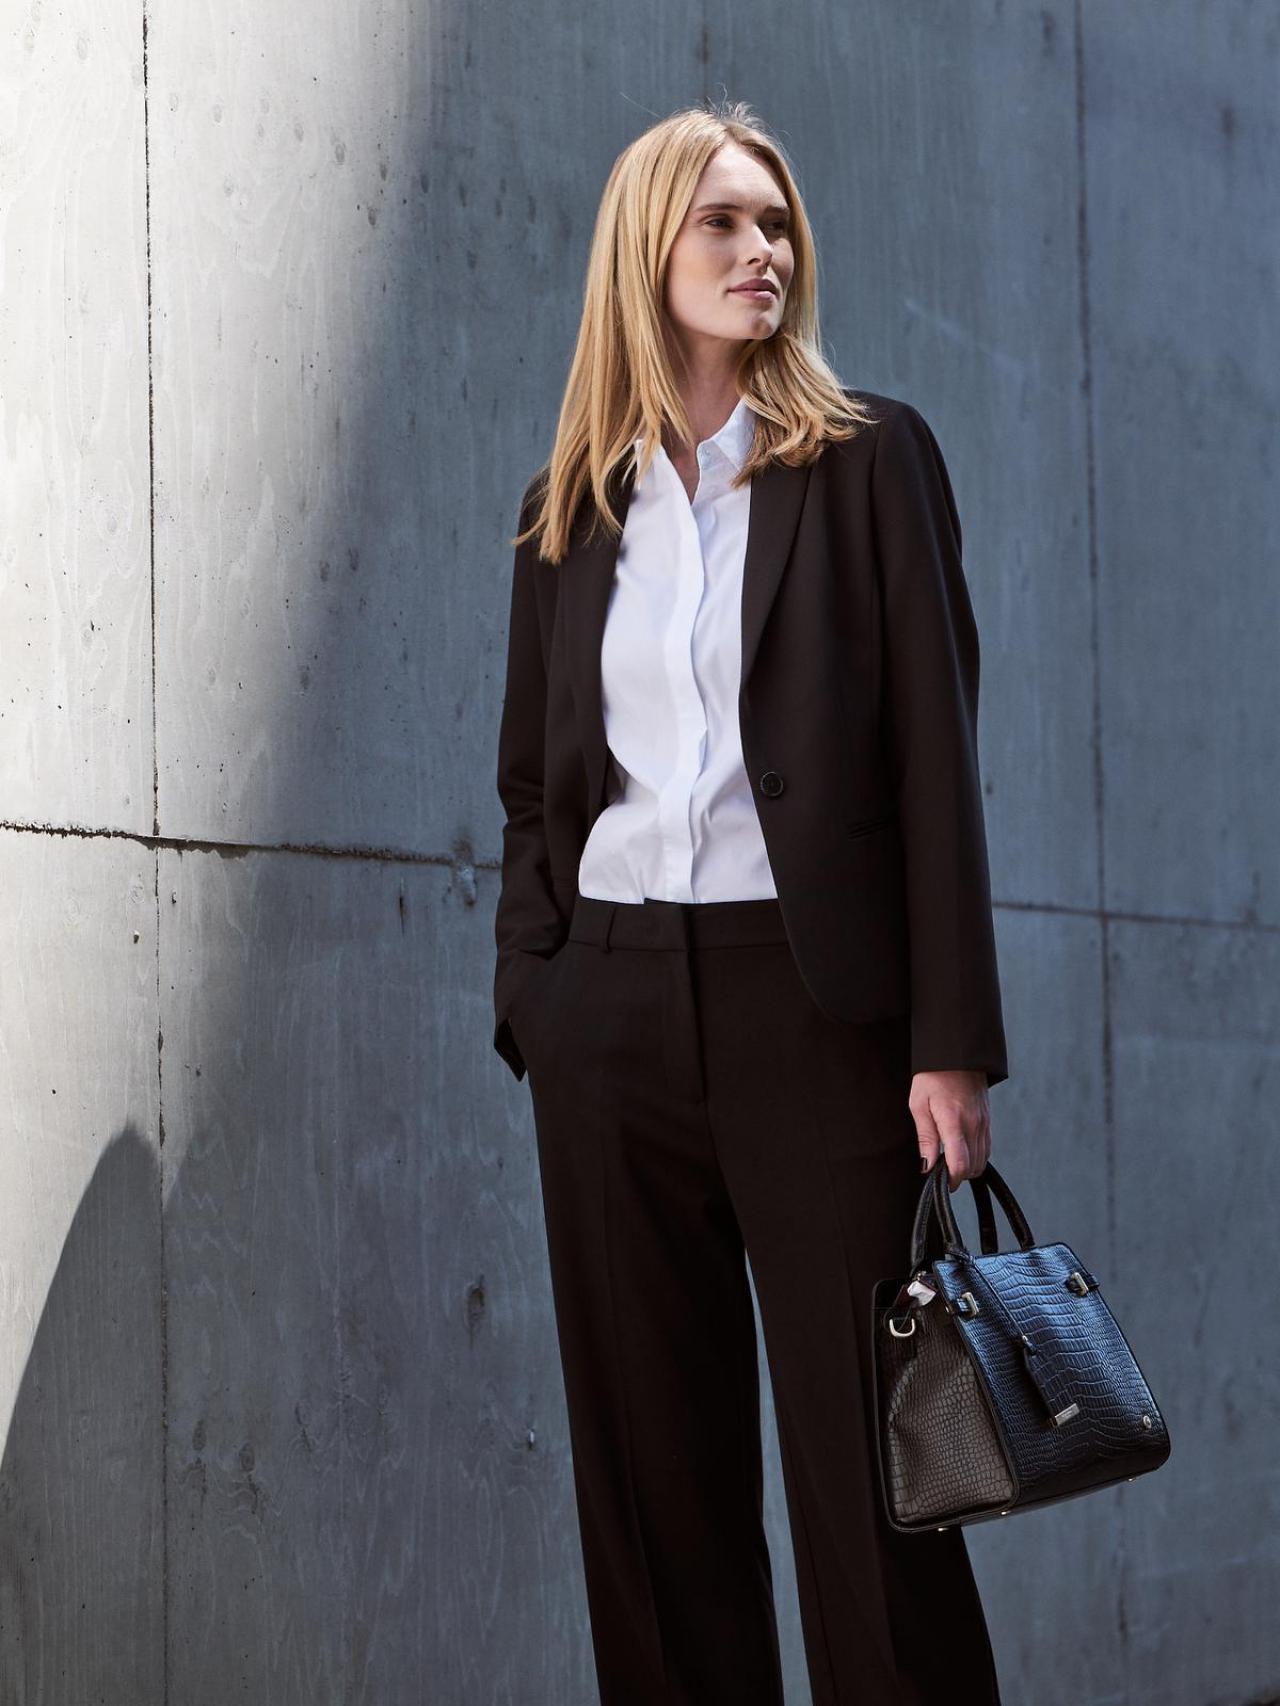 Altijd stijlvol: zwarte blazer (89,99 euro), bijhorende pantalon (59,99 euro) en witte bloes (59,99 euro), van d’Auvry bij e5.